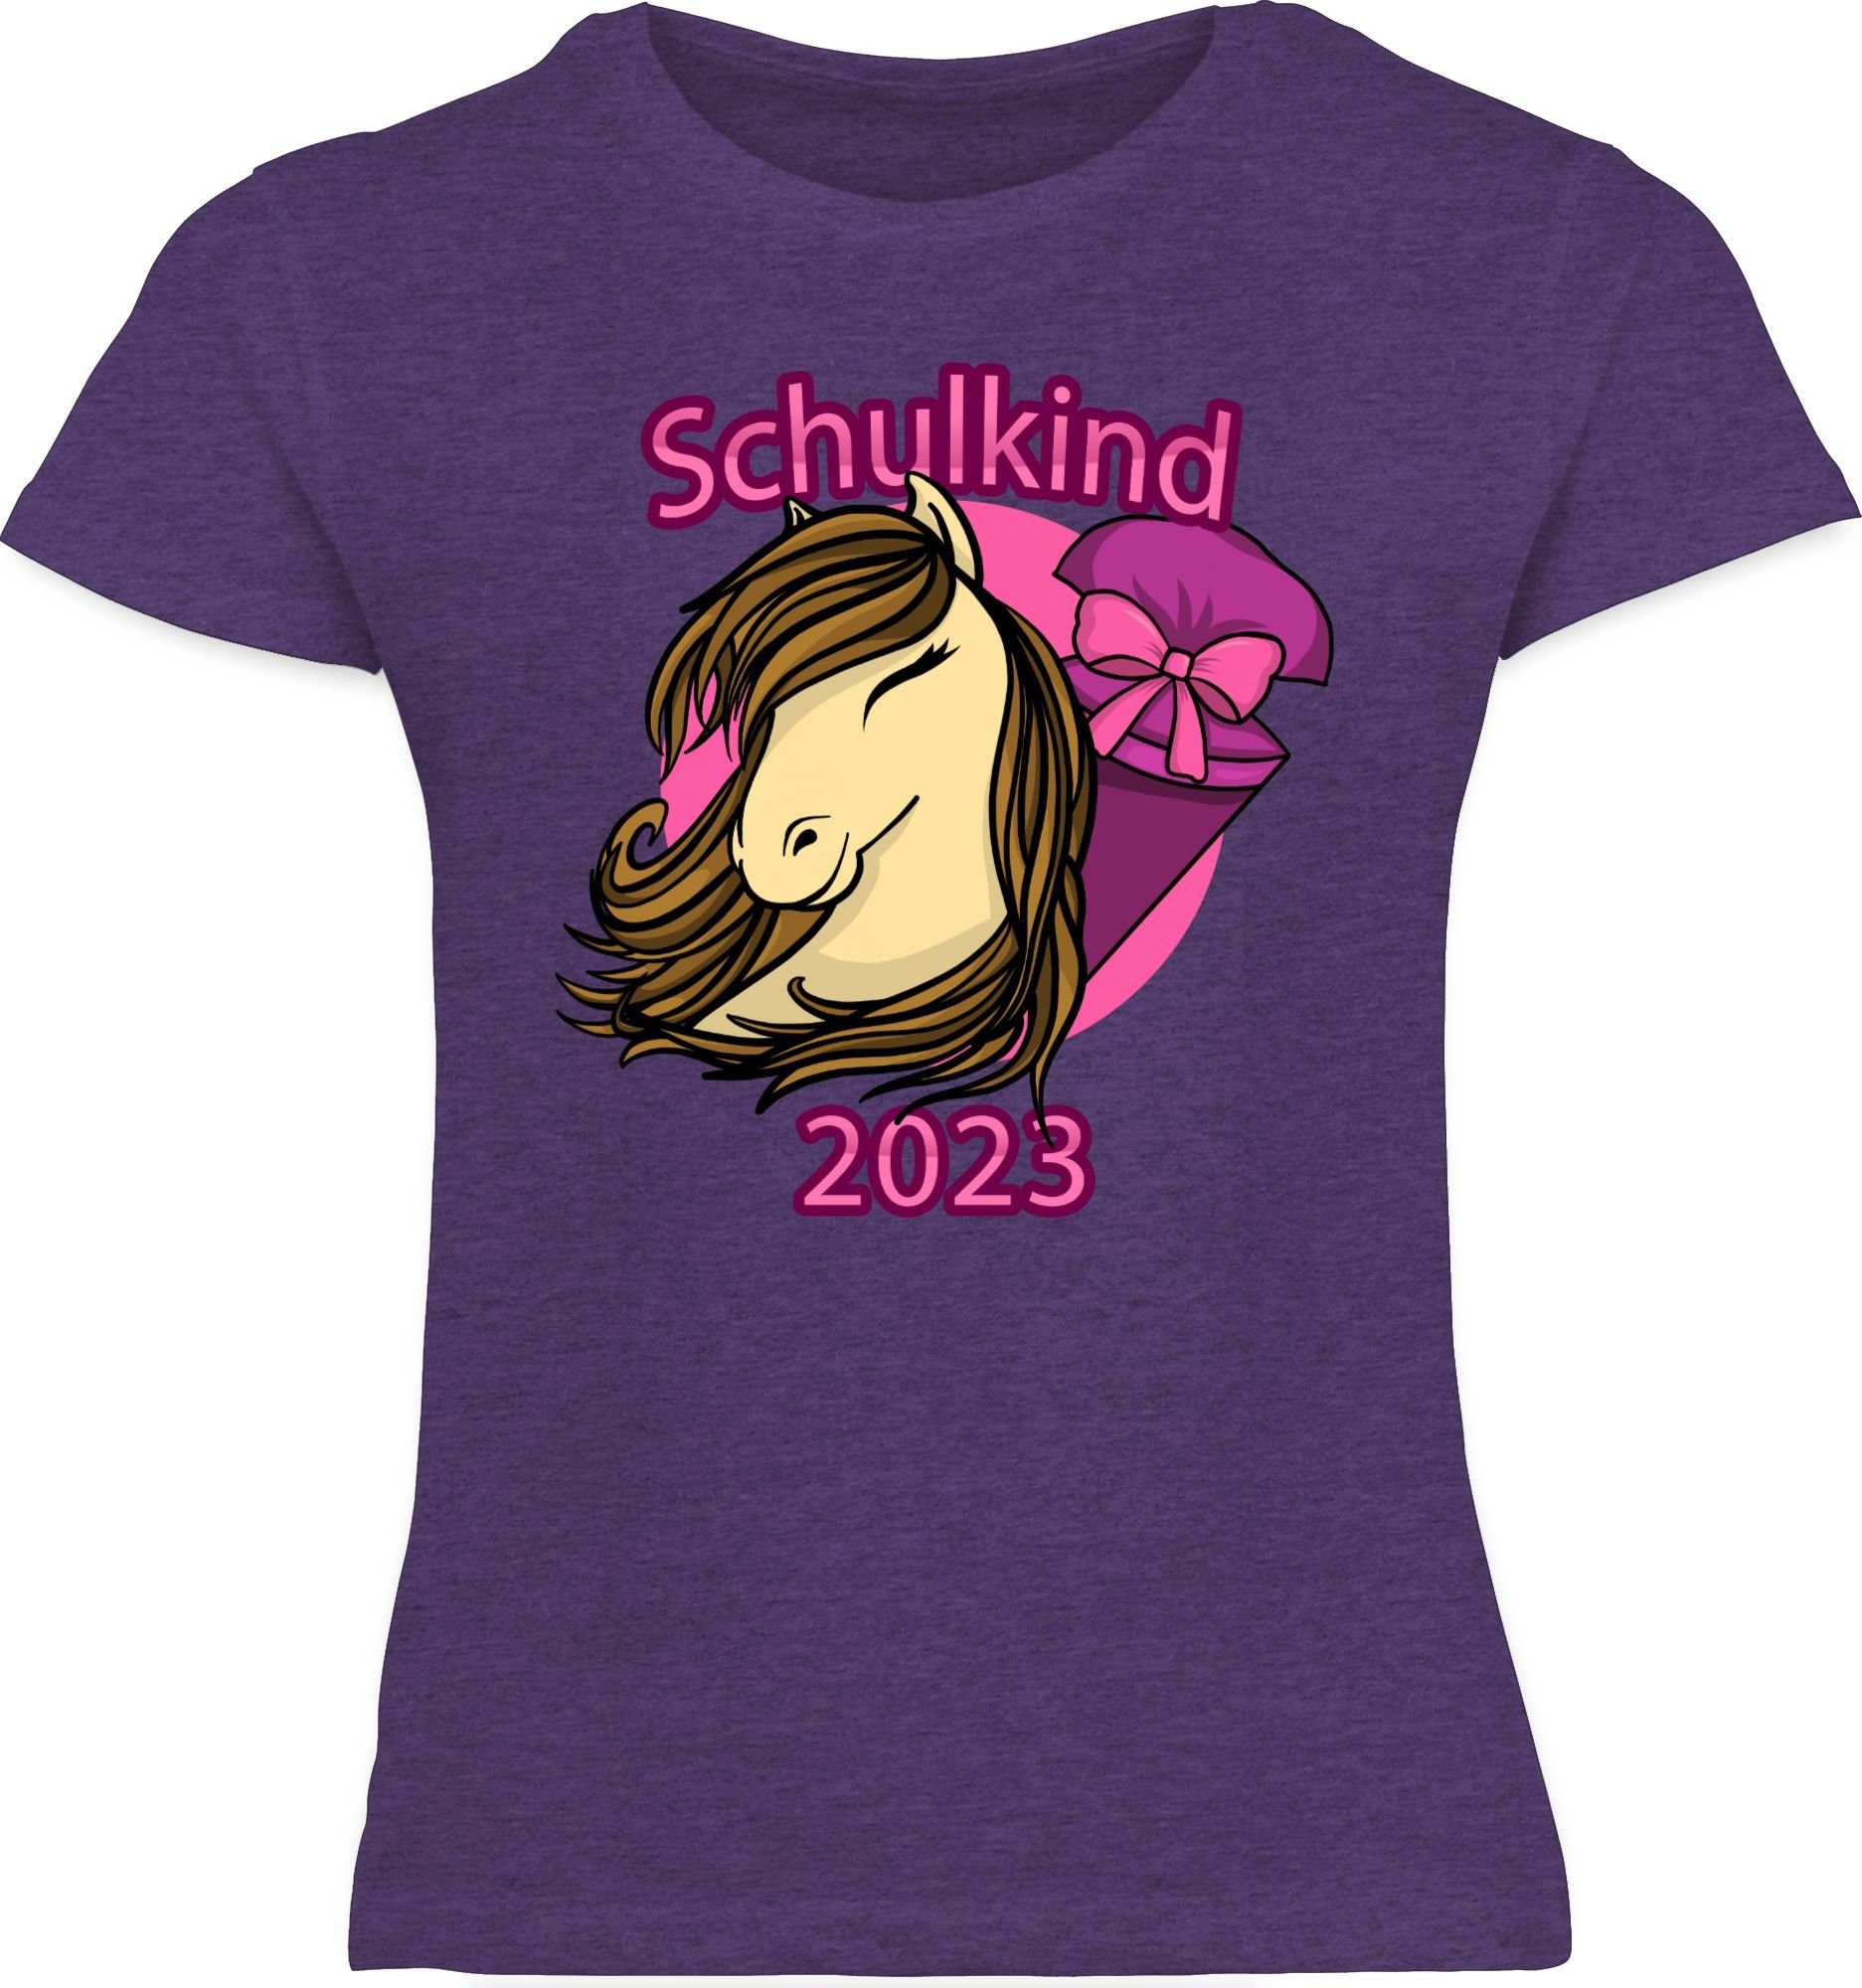 2023 T-Shirt Shirtracer Schultüte Meliert mit Lila Pferd 1 Einschulung Schulkind Mädchen